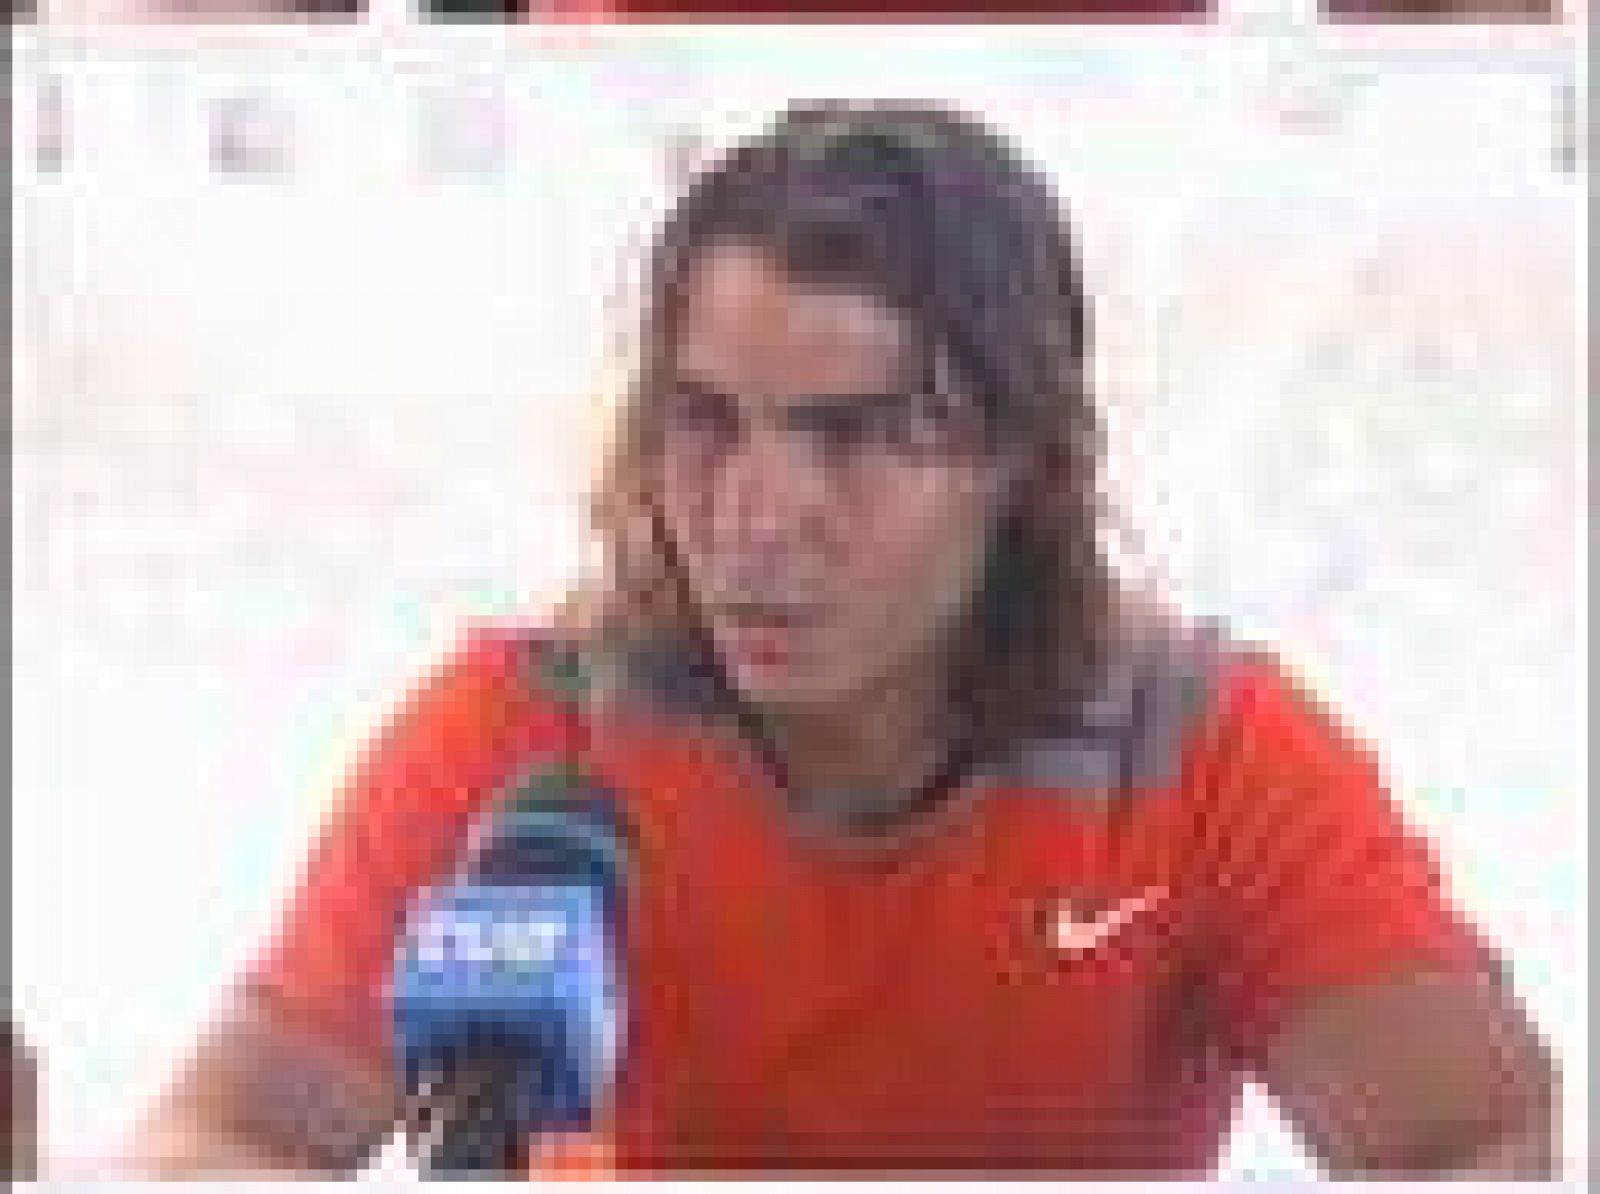 Sin programa: Nadal: "Pedro Muñoz es un mentiroso | RTVE Play